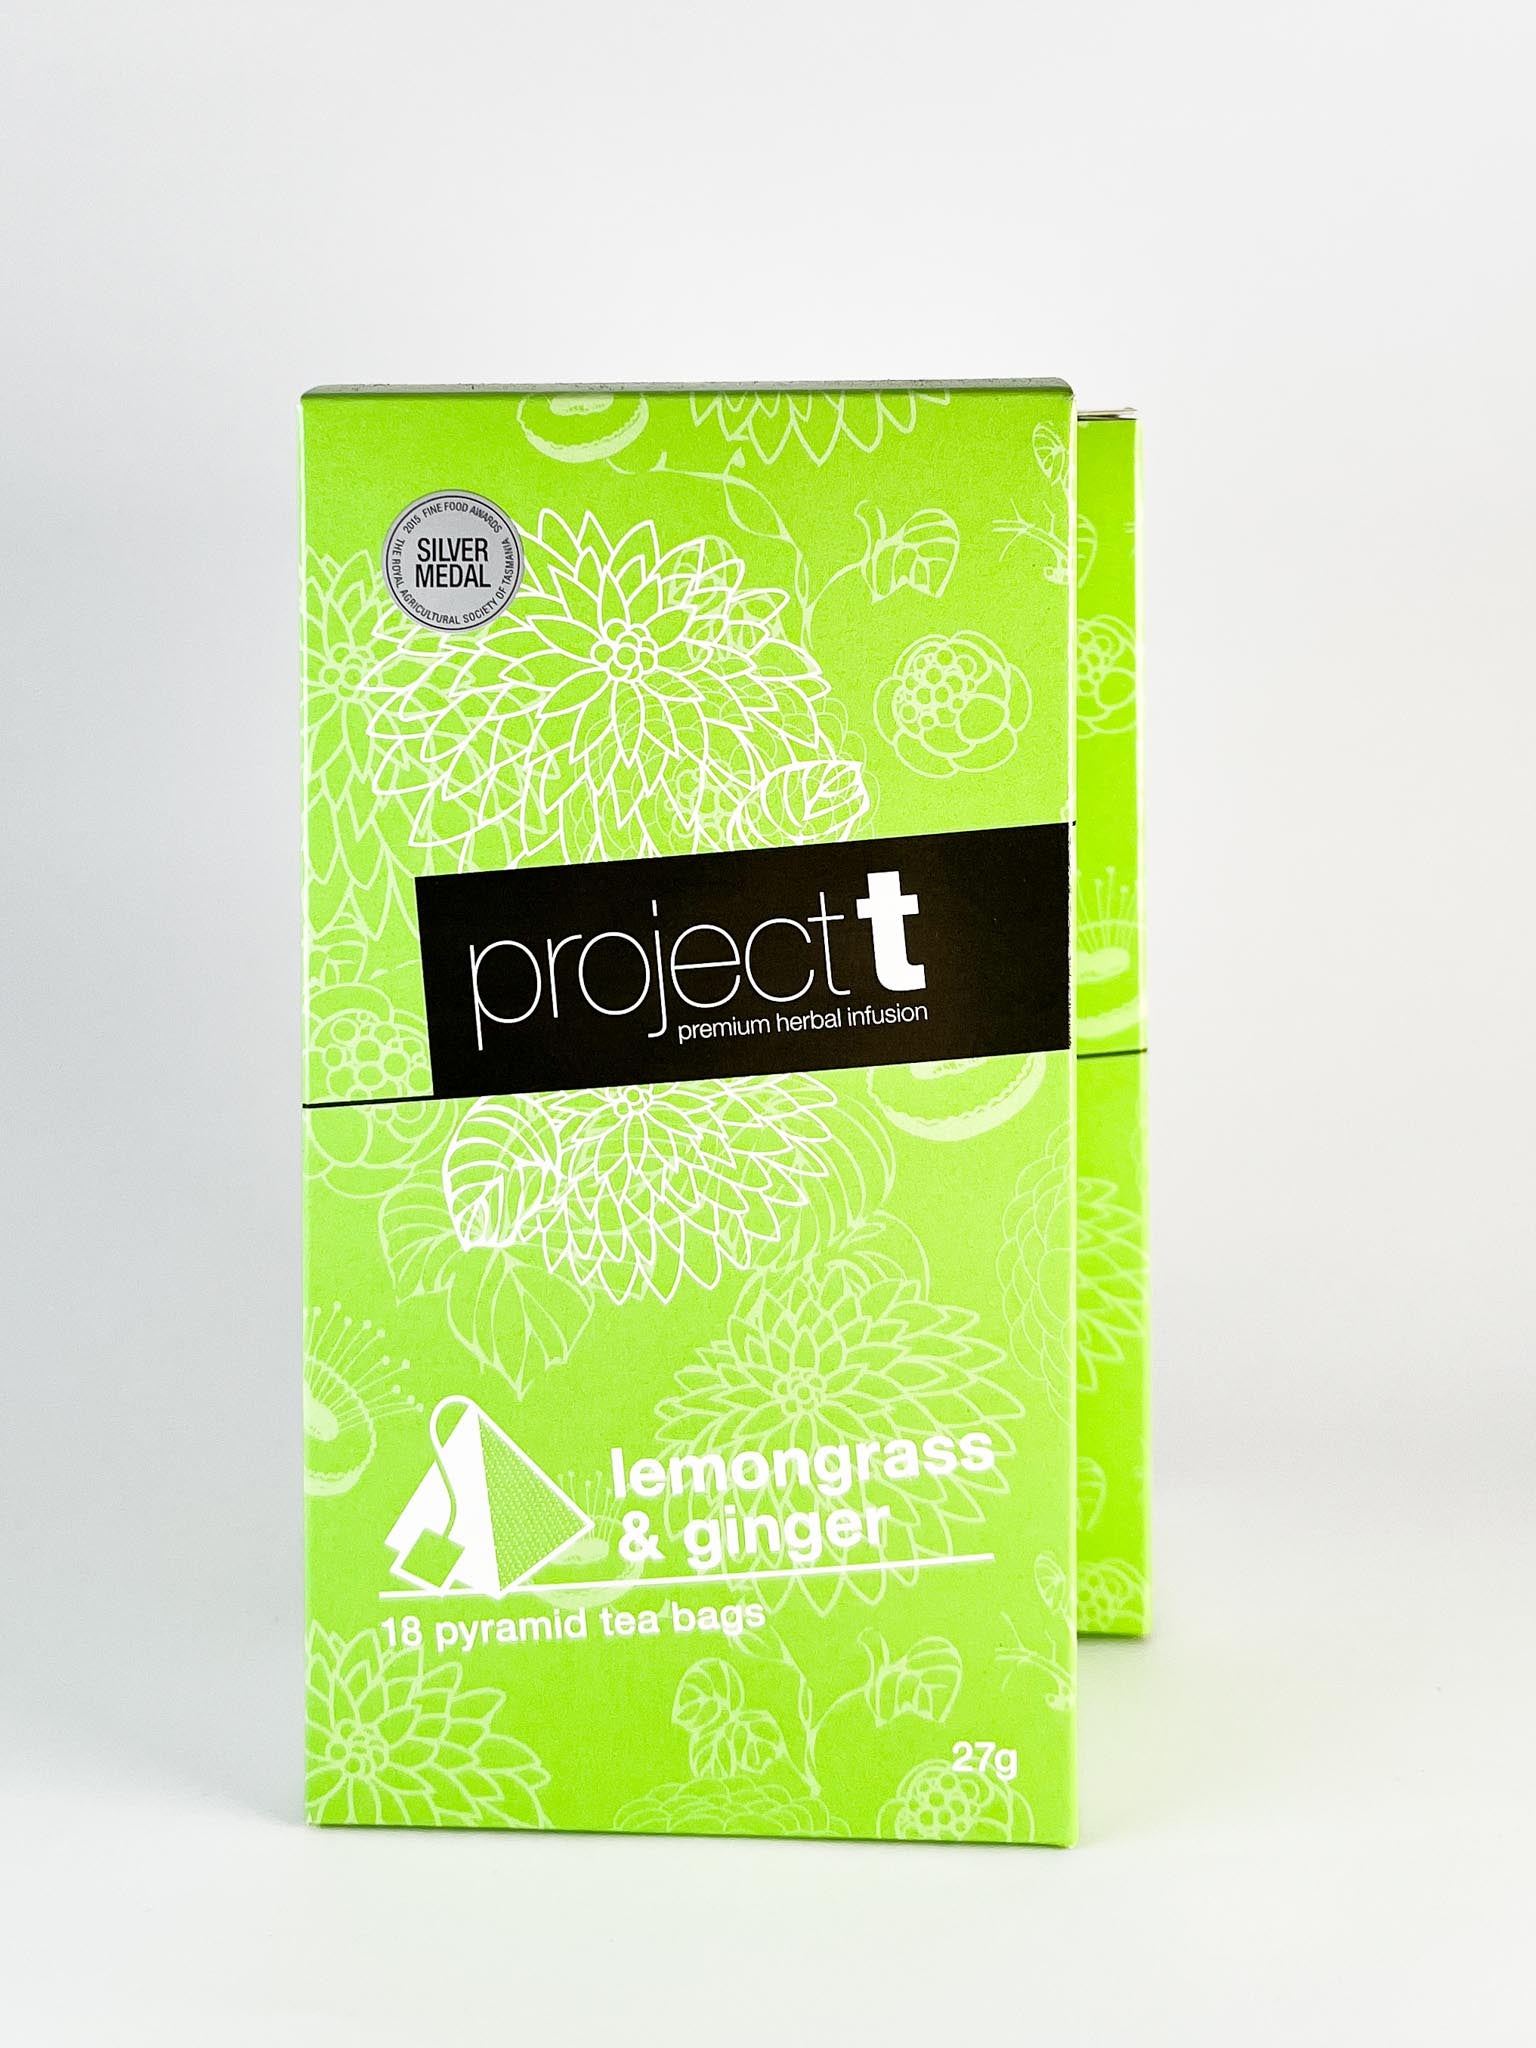 Project T Lemongrass & Ginger Pyramid Tea Bags 18pk